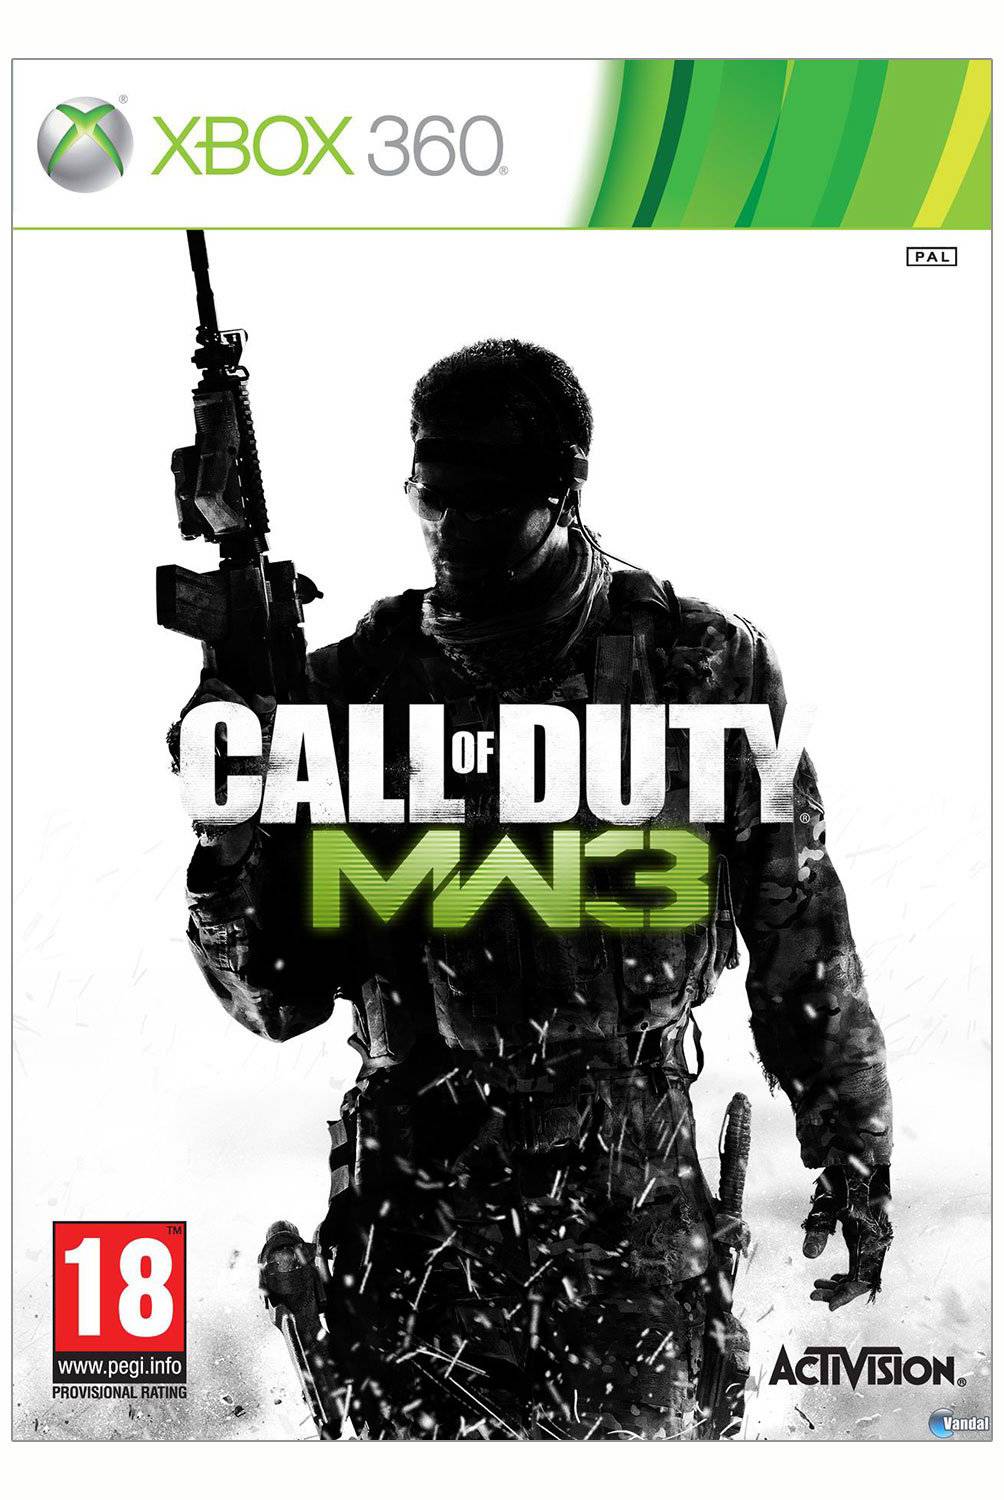 MICROSOFT - Call Of Duty Modern Warfare 3 (Español) (X360)